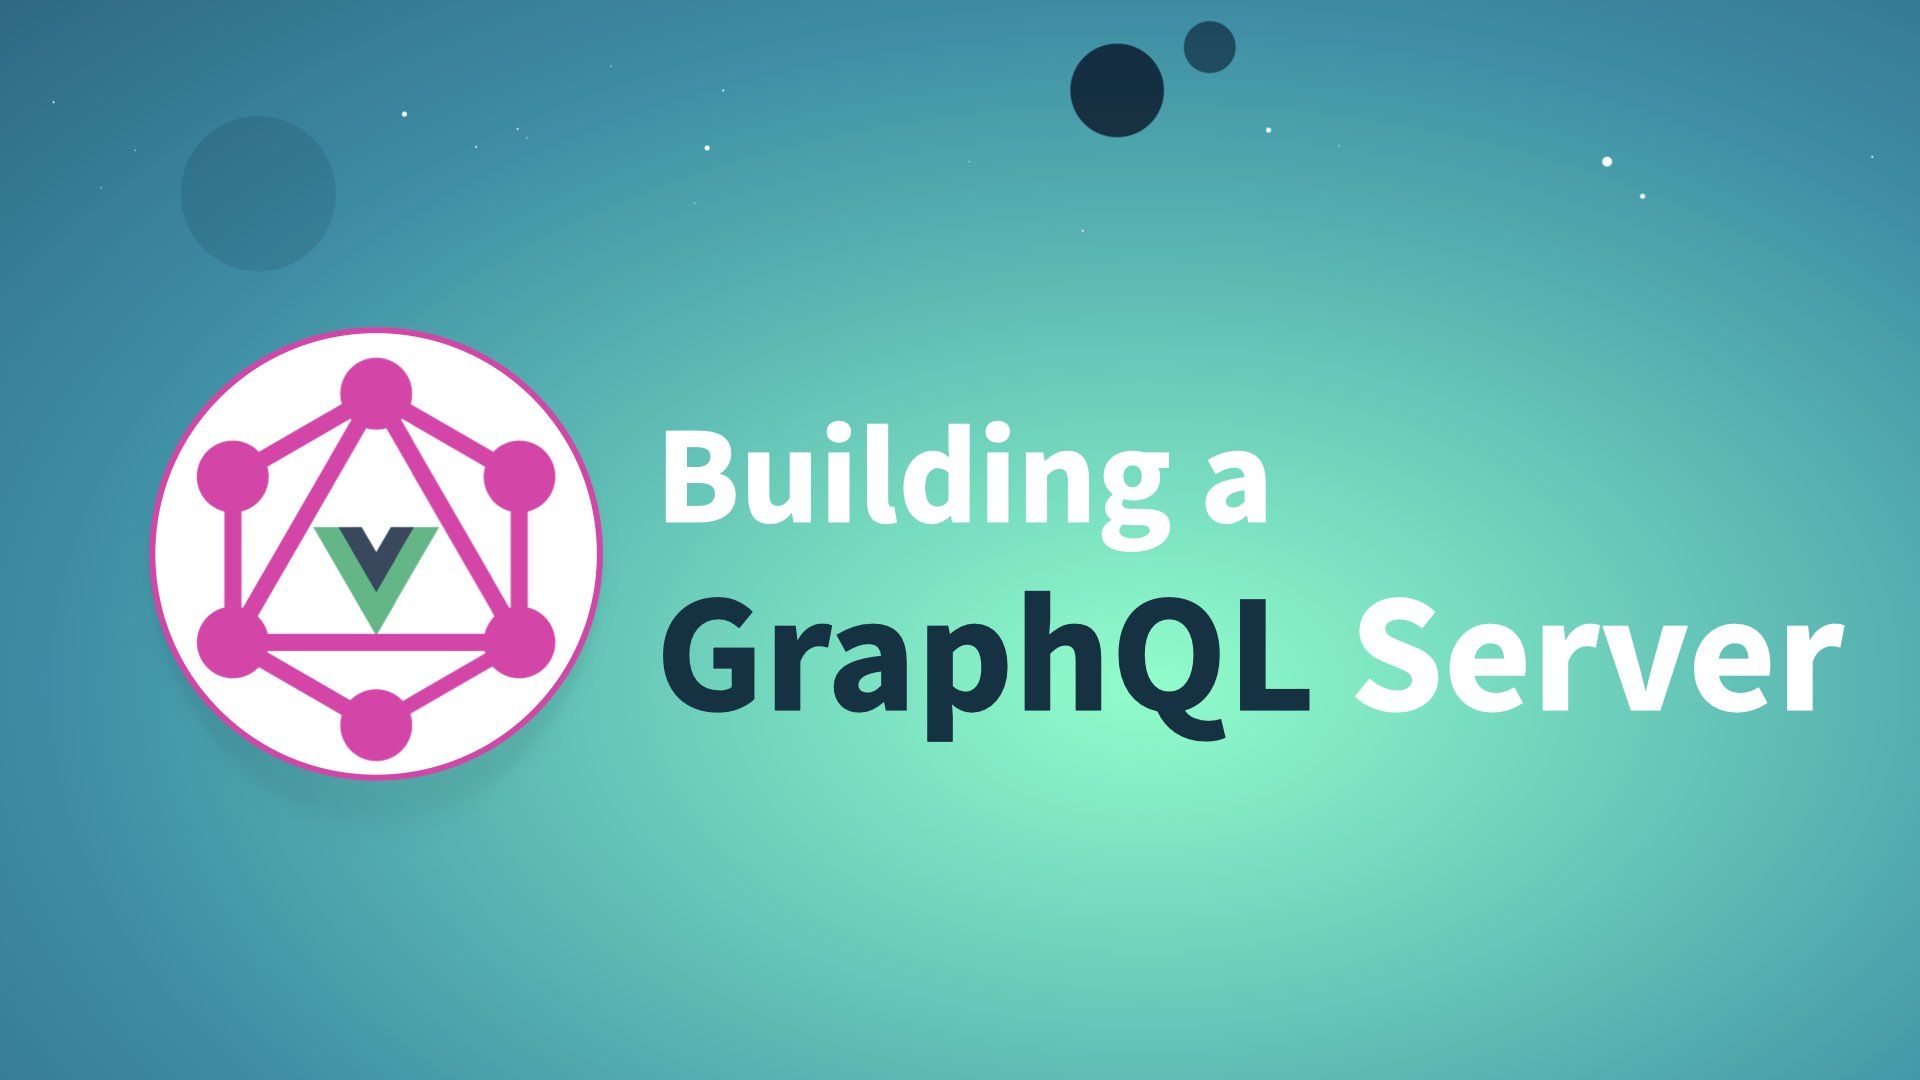 Part 2: Building a GraphQL Server